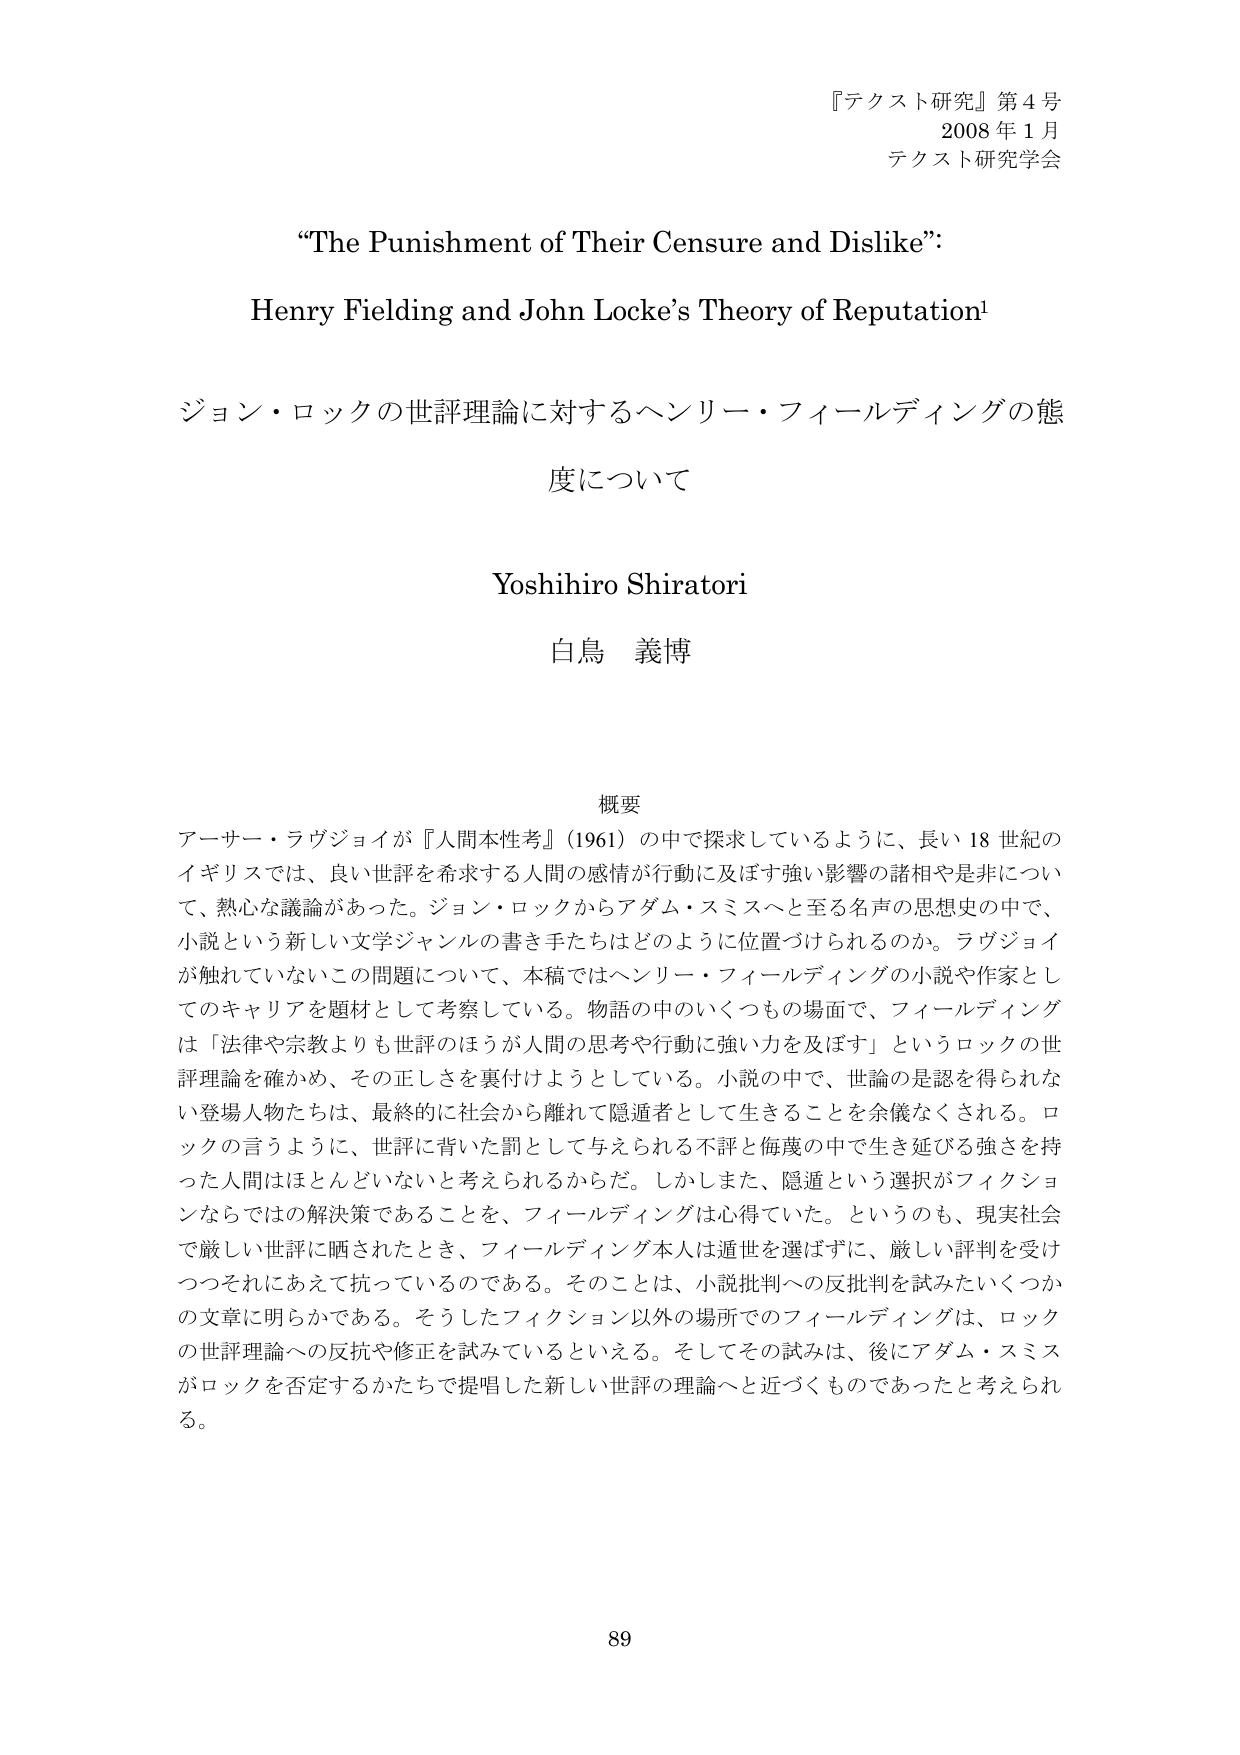 Henry Fielding and John Locke’s Theory of Reputation - Paper